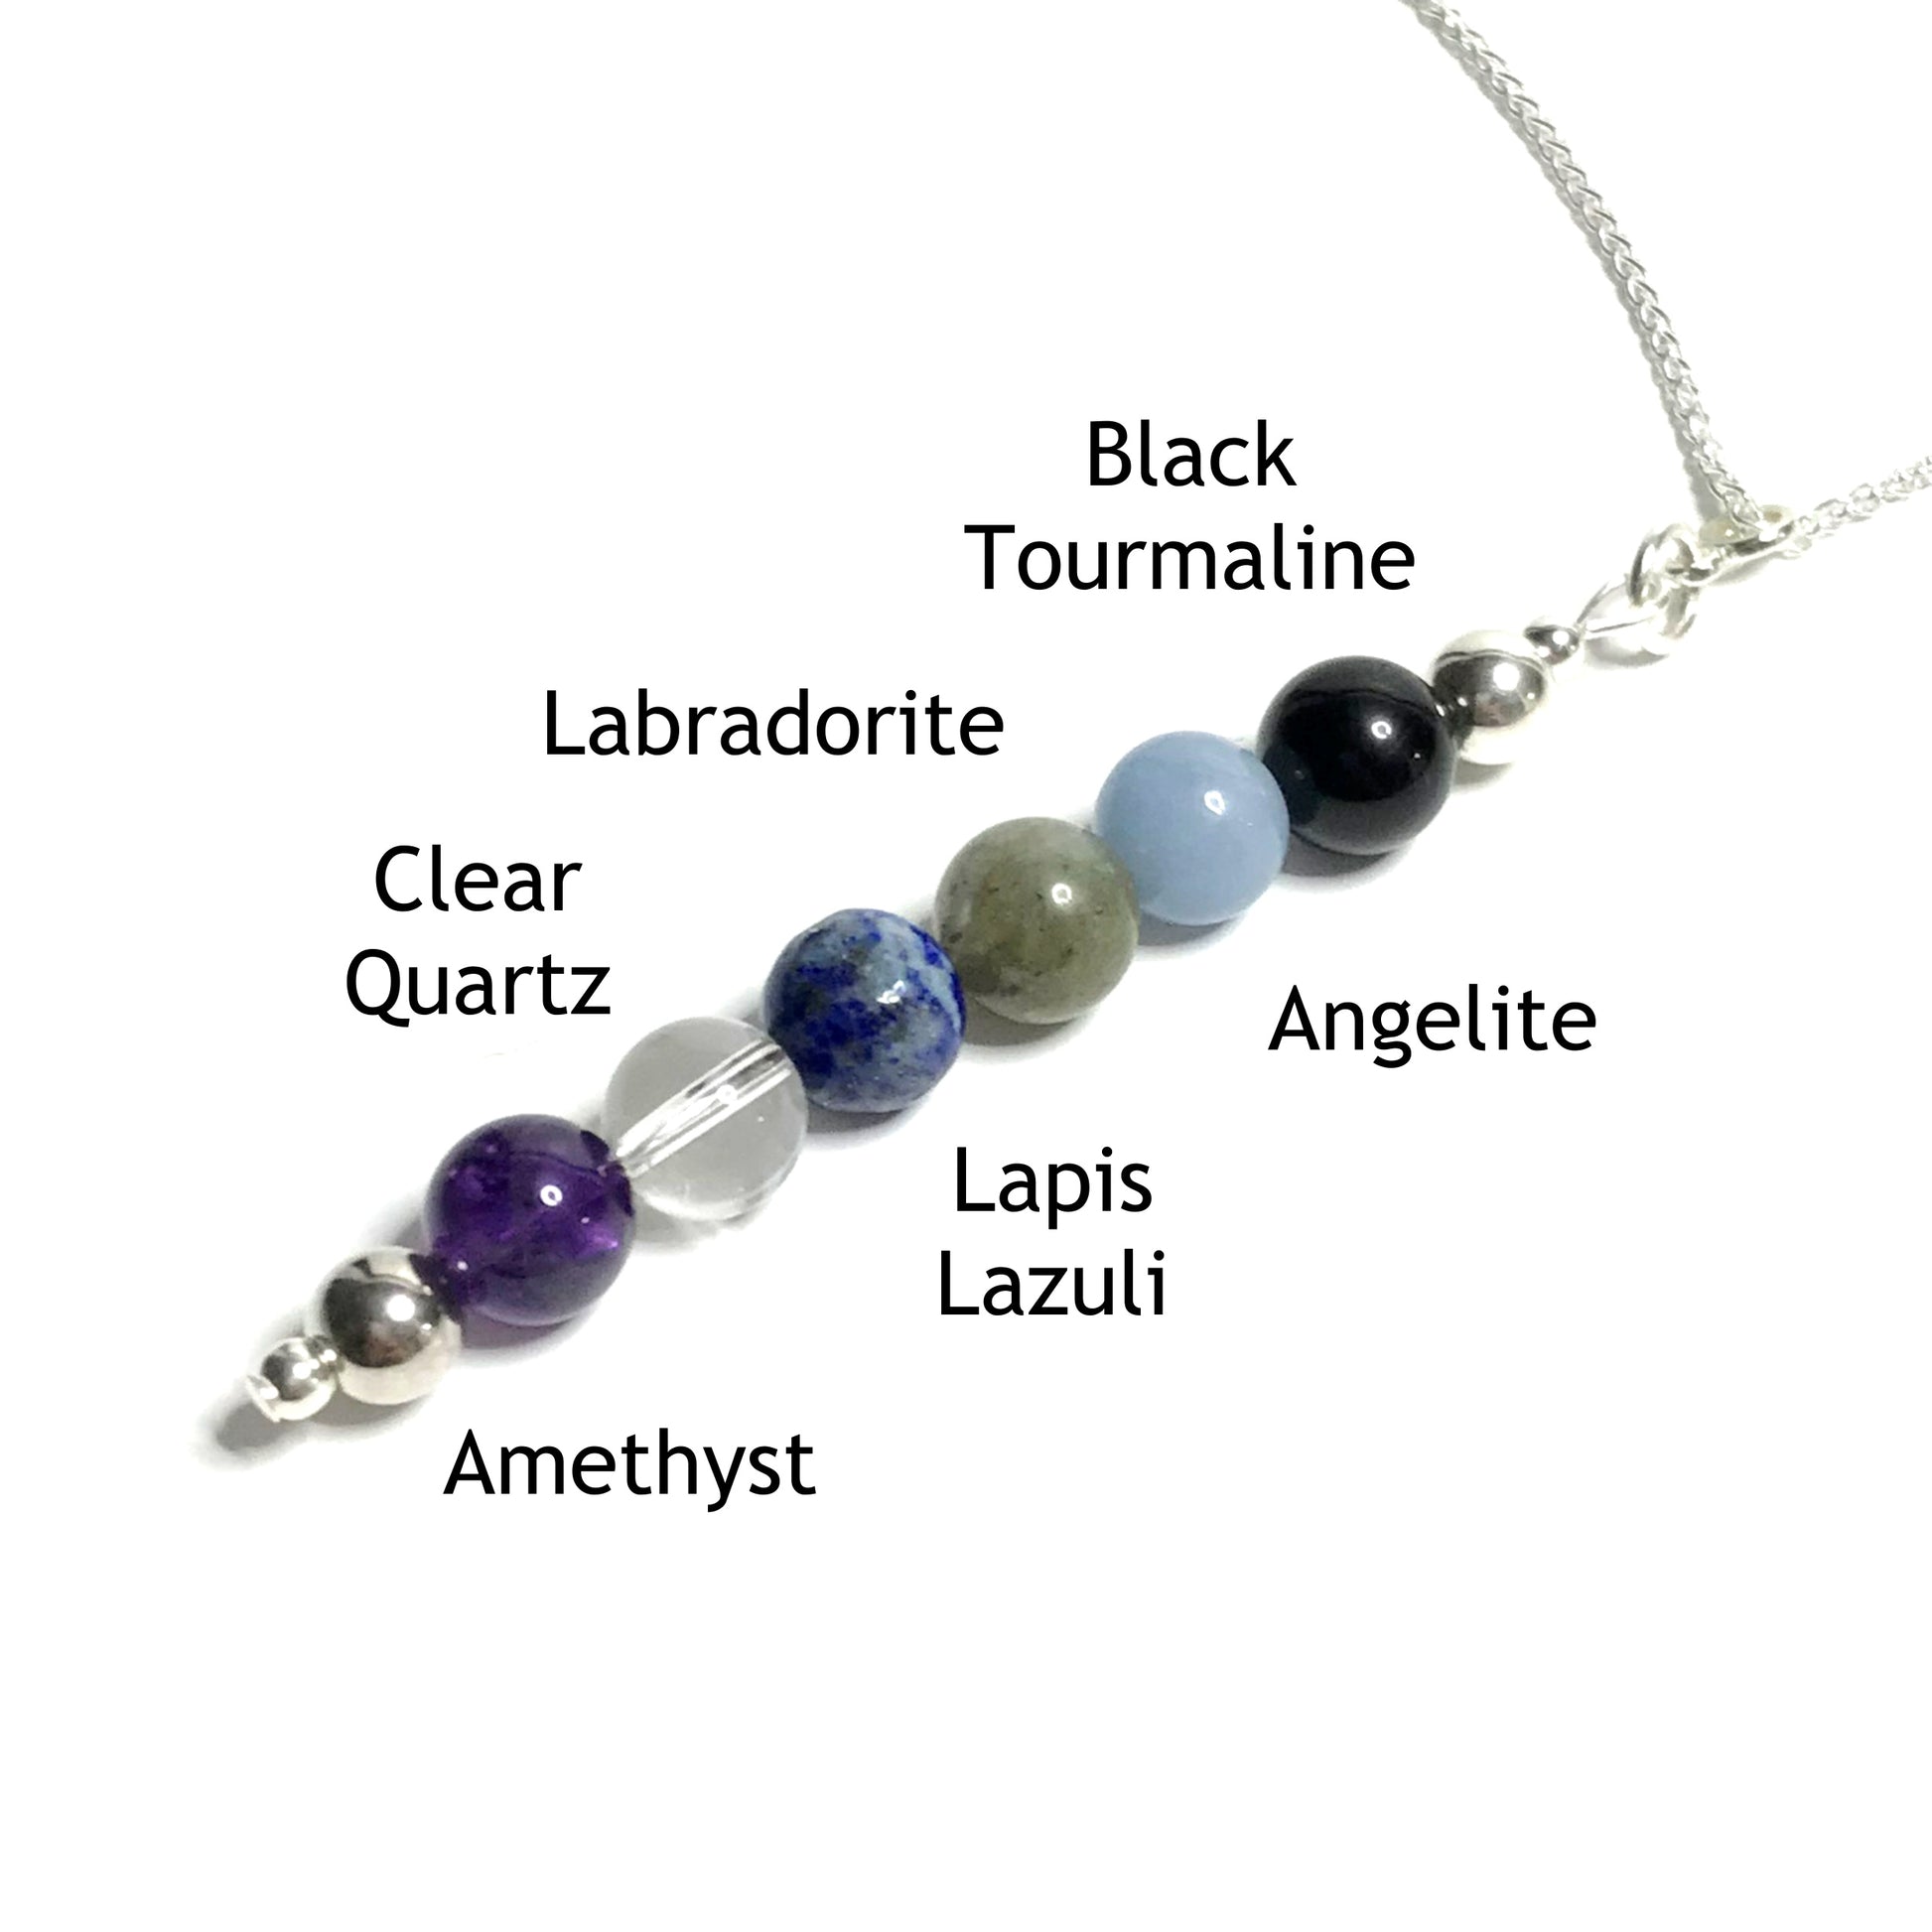 Meditation pendnt with the beads labelled as amethyst, clear quartz, lapis lazuli, labradorite, angelite and black tourmaline